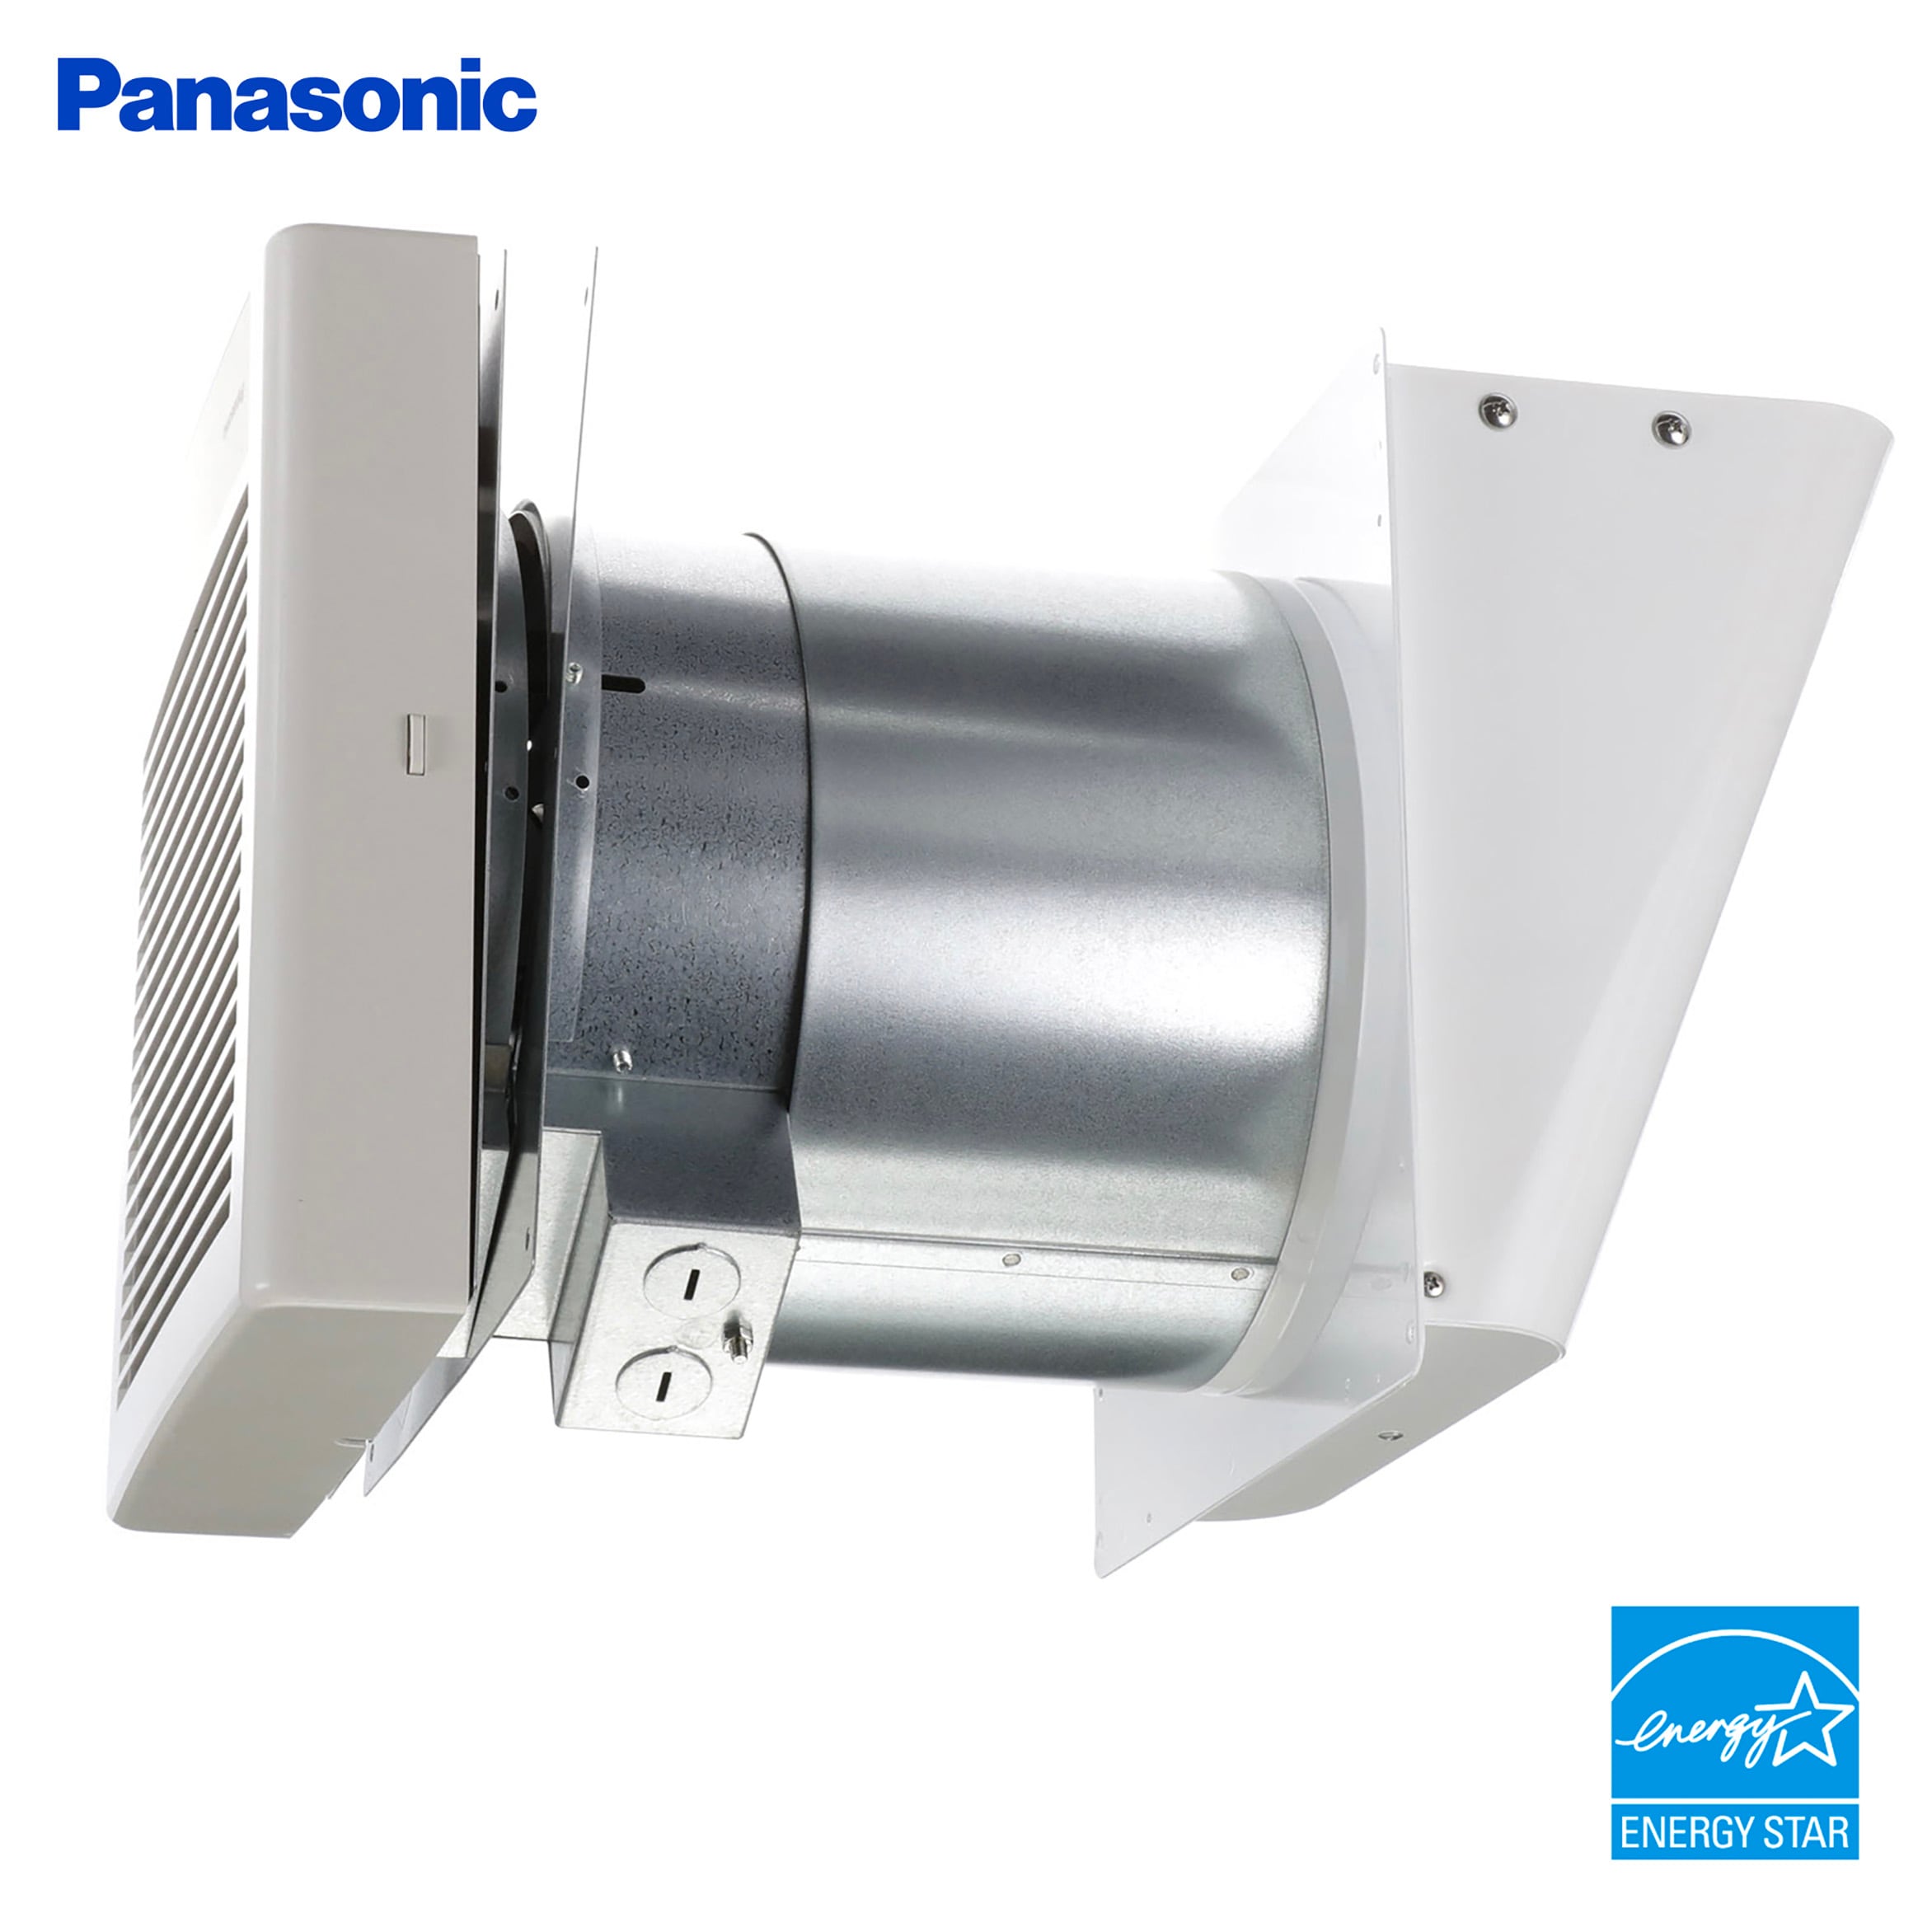 Panasonic 1.1-Sone 70-CFM White Bathroom Fan ENERGY STAR in Bathroom Fans & Heaters department at